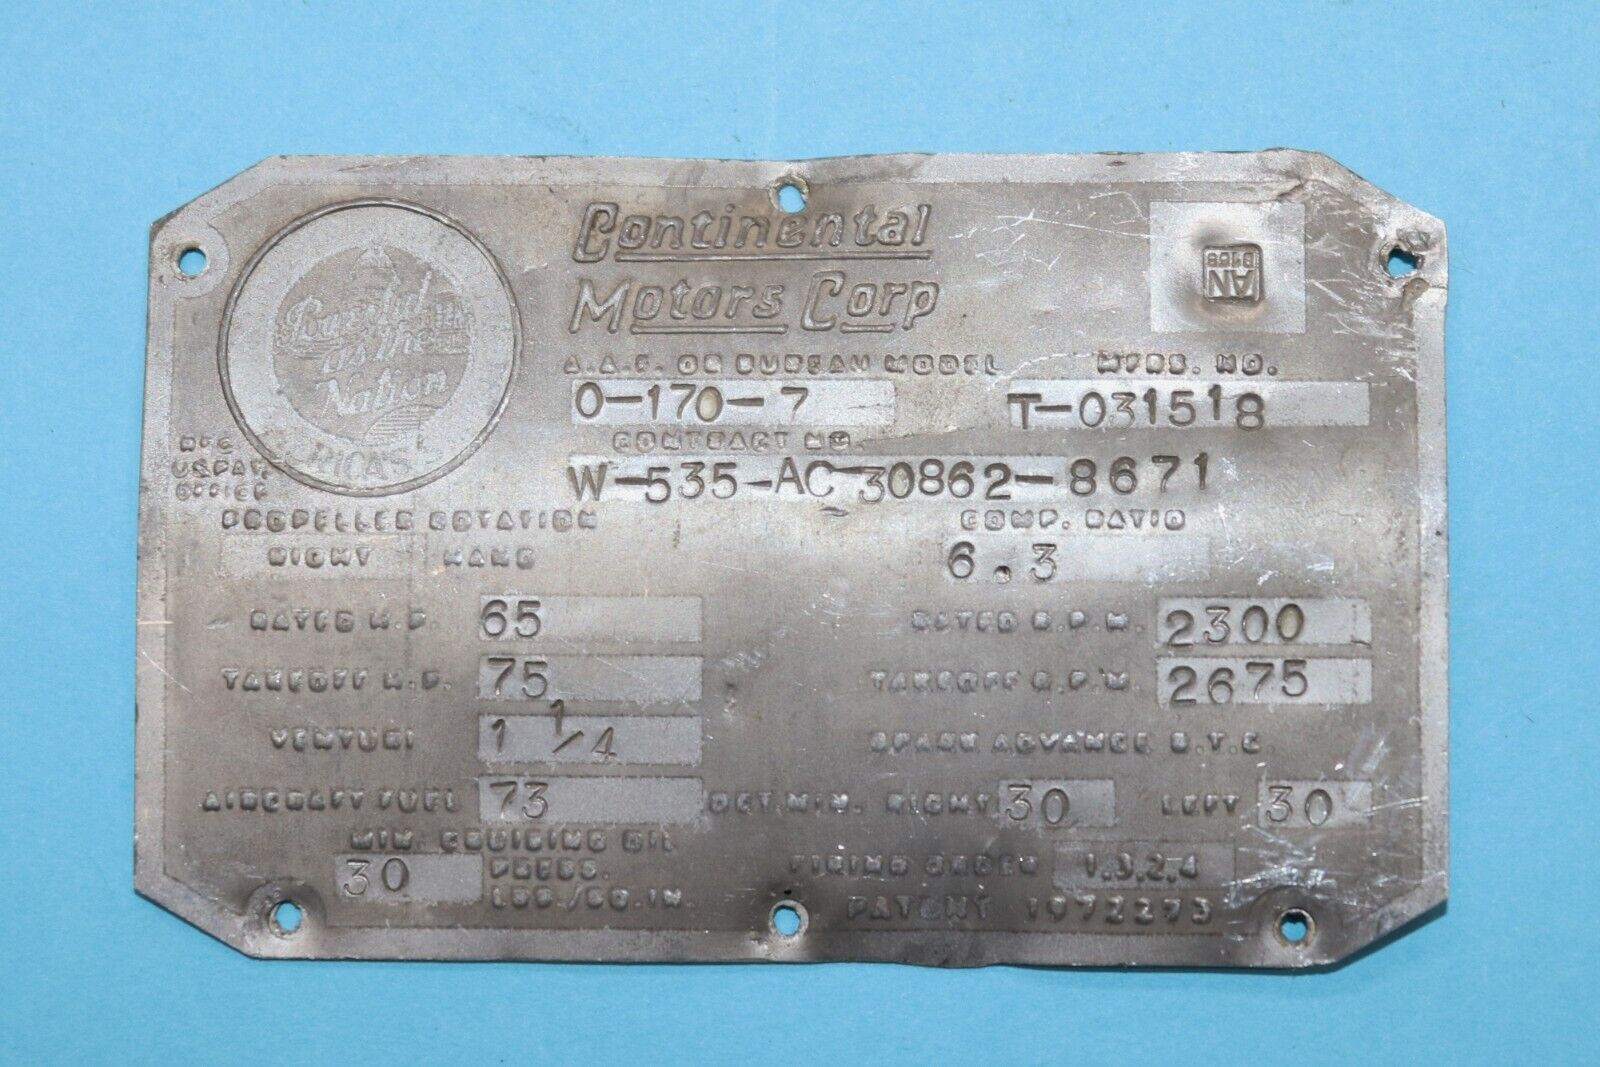  Original Continental O-170-7, 65/75 HP Engine Data Plate